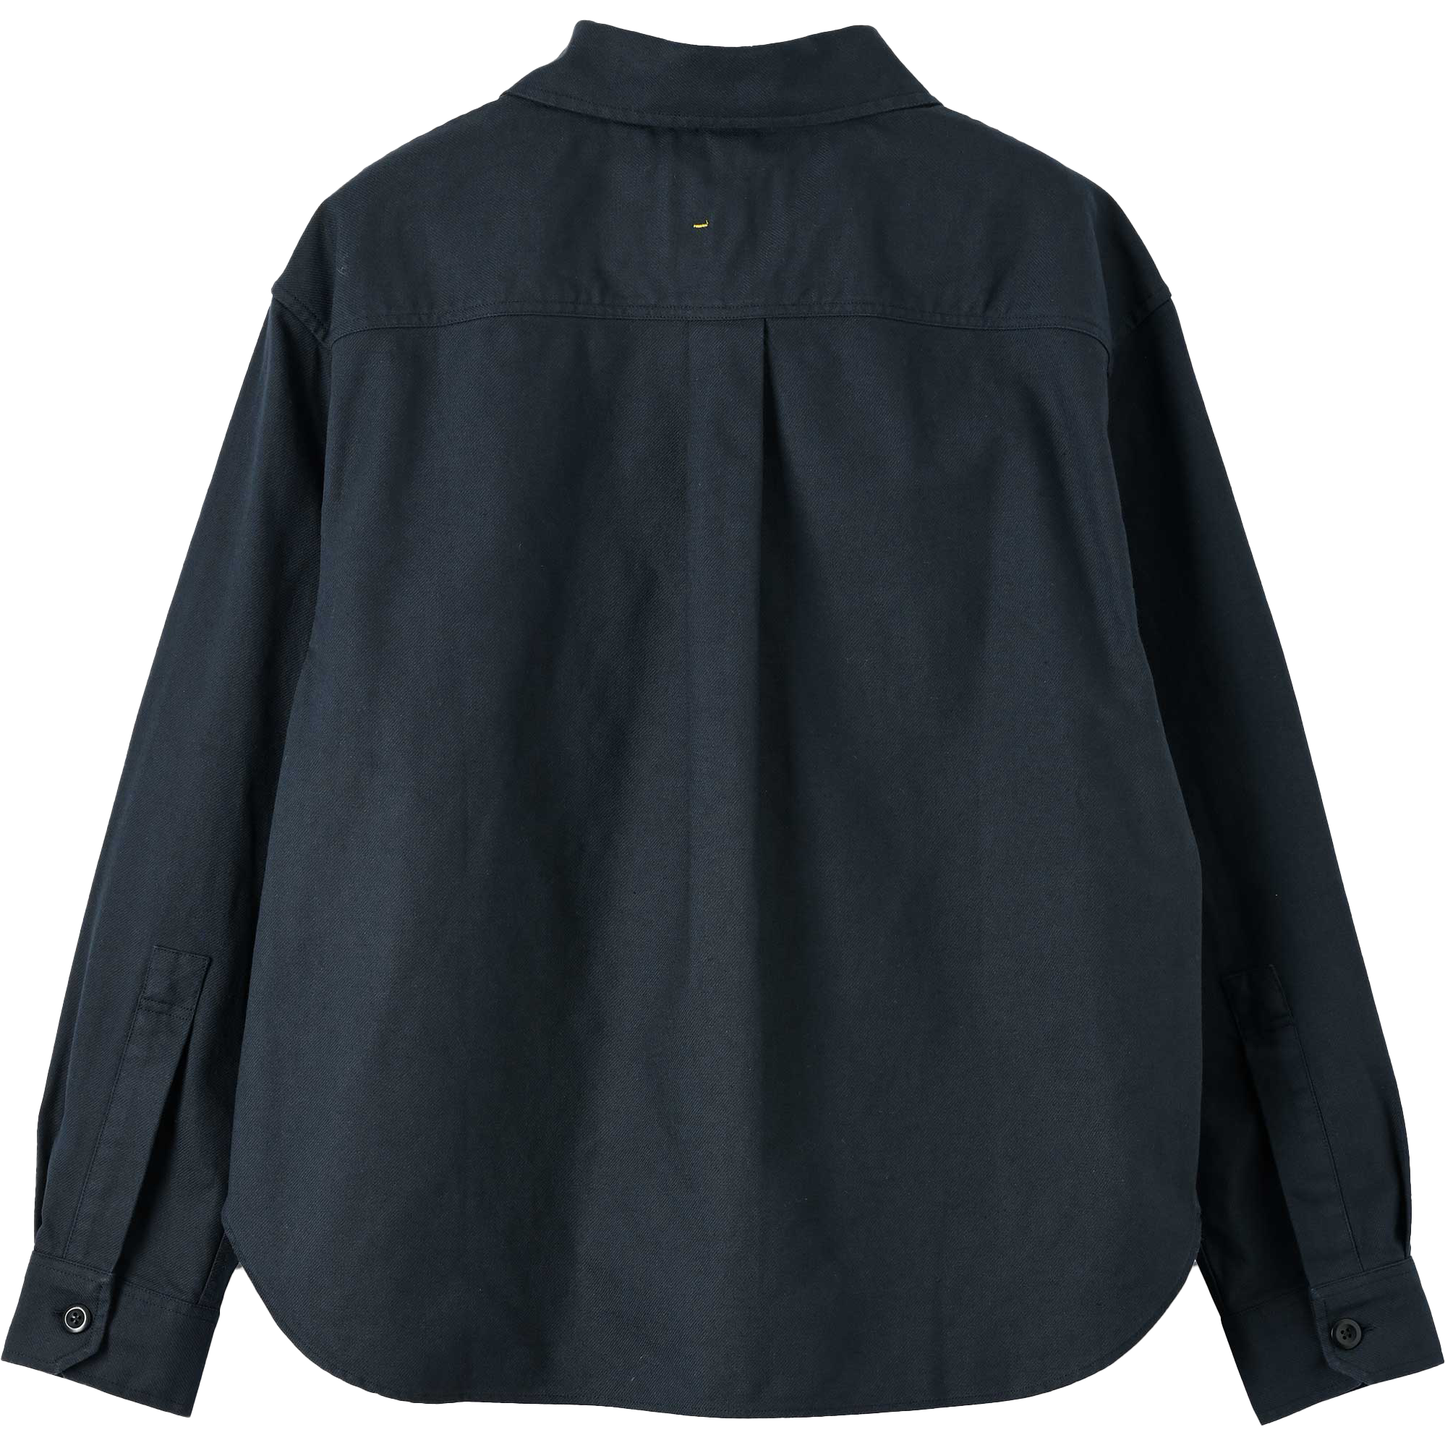 Margaret Howell W Shirtjacket Pull on Zip Shirt, Dark Navy